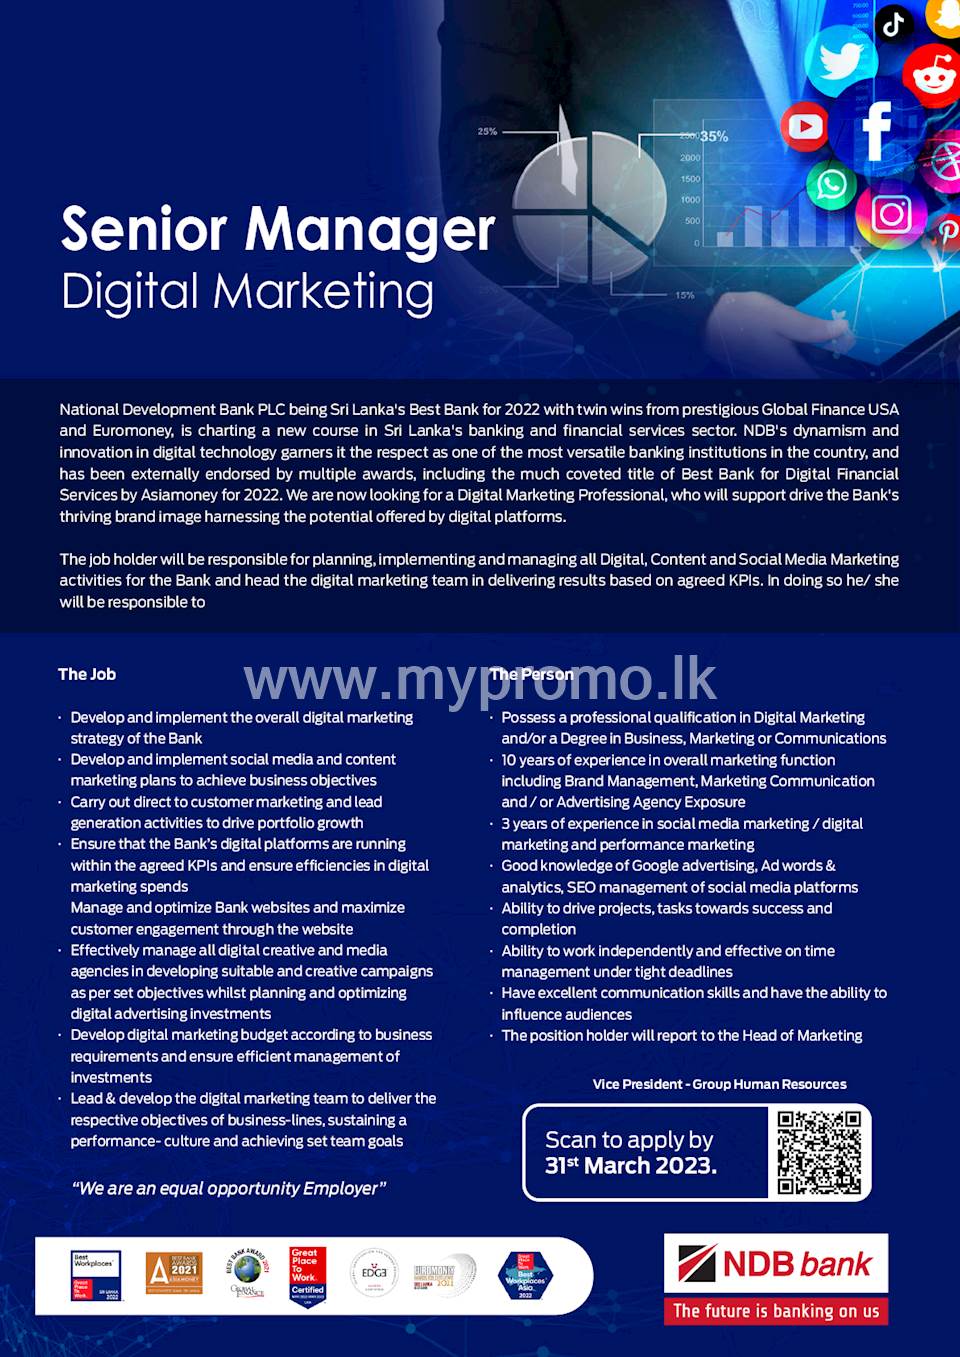  Senior Manager - Digital Marketing